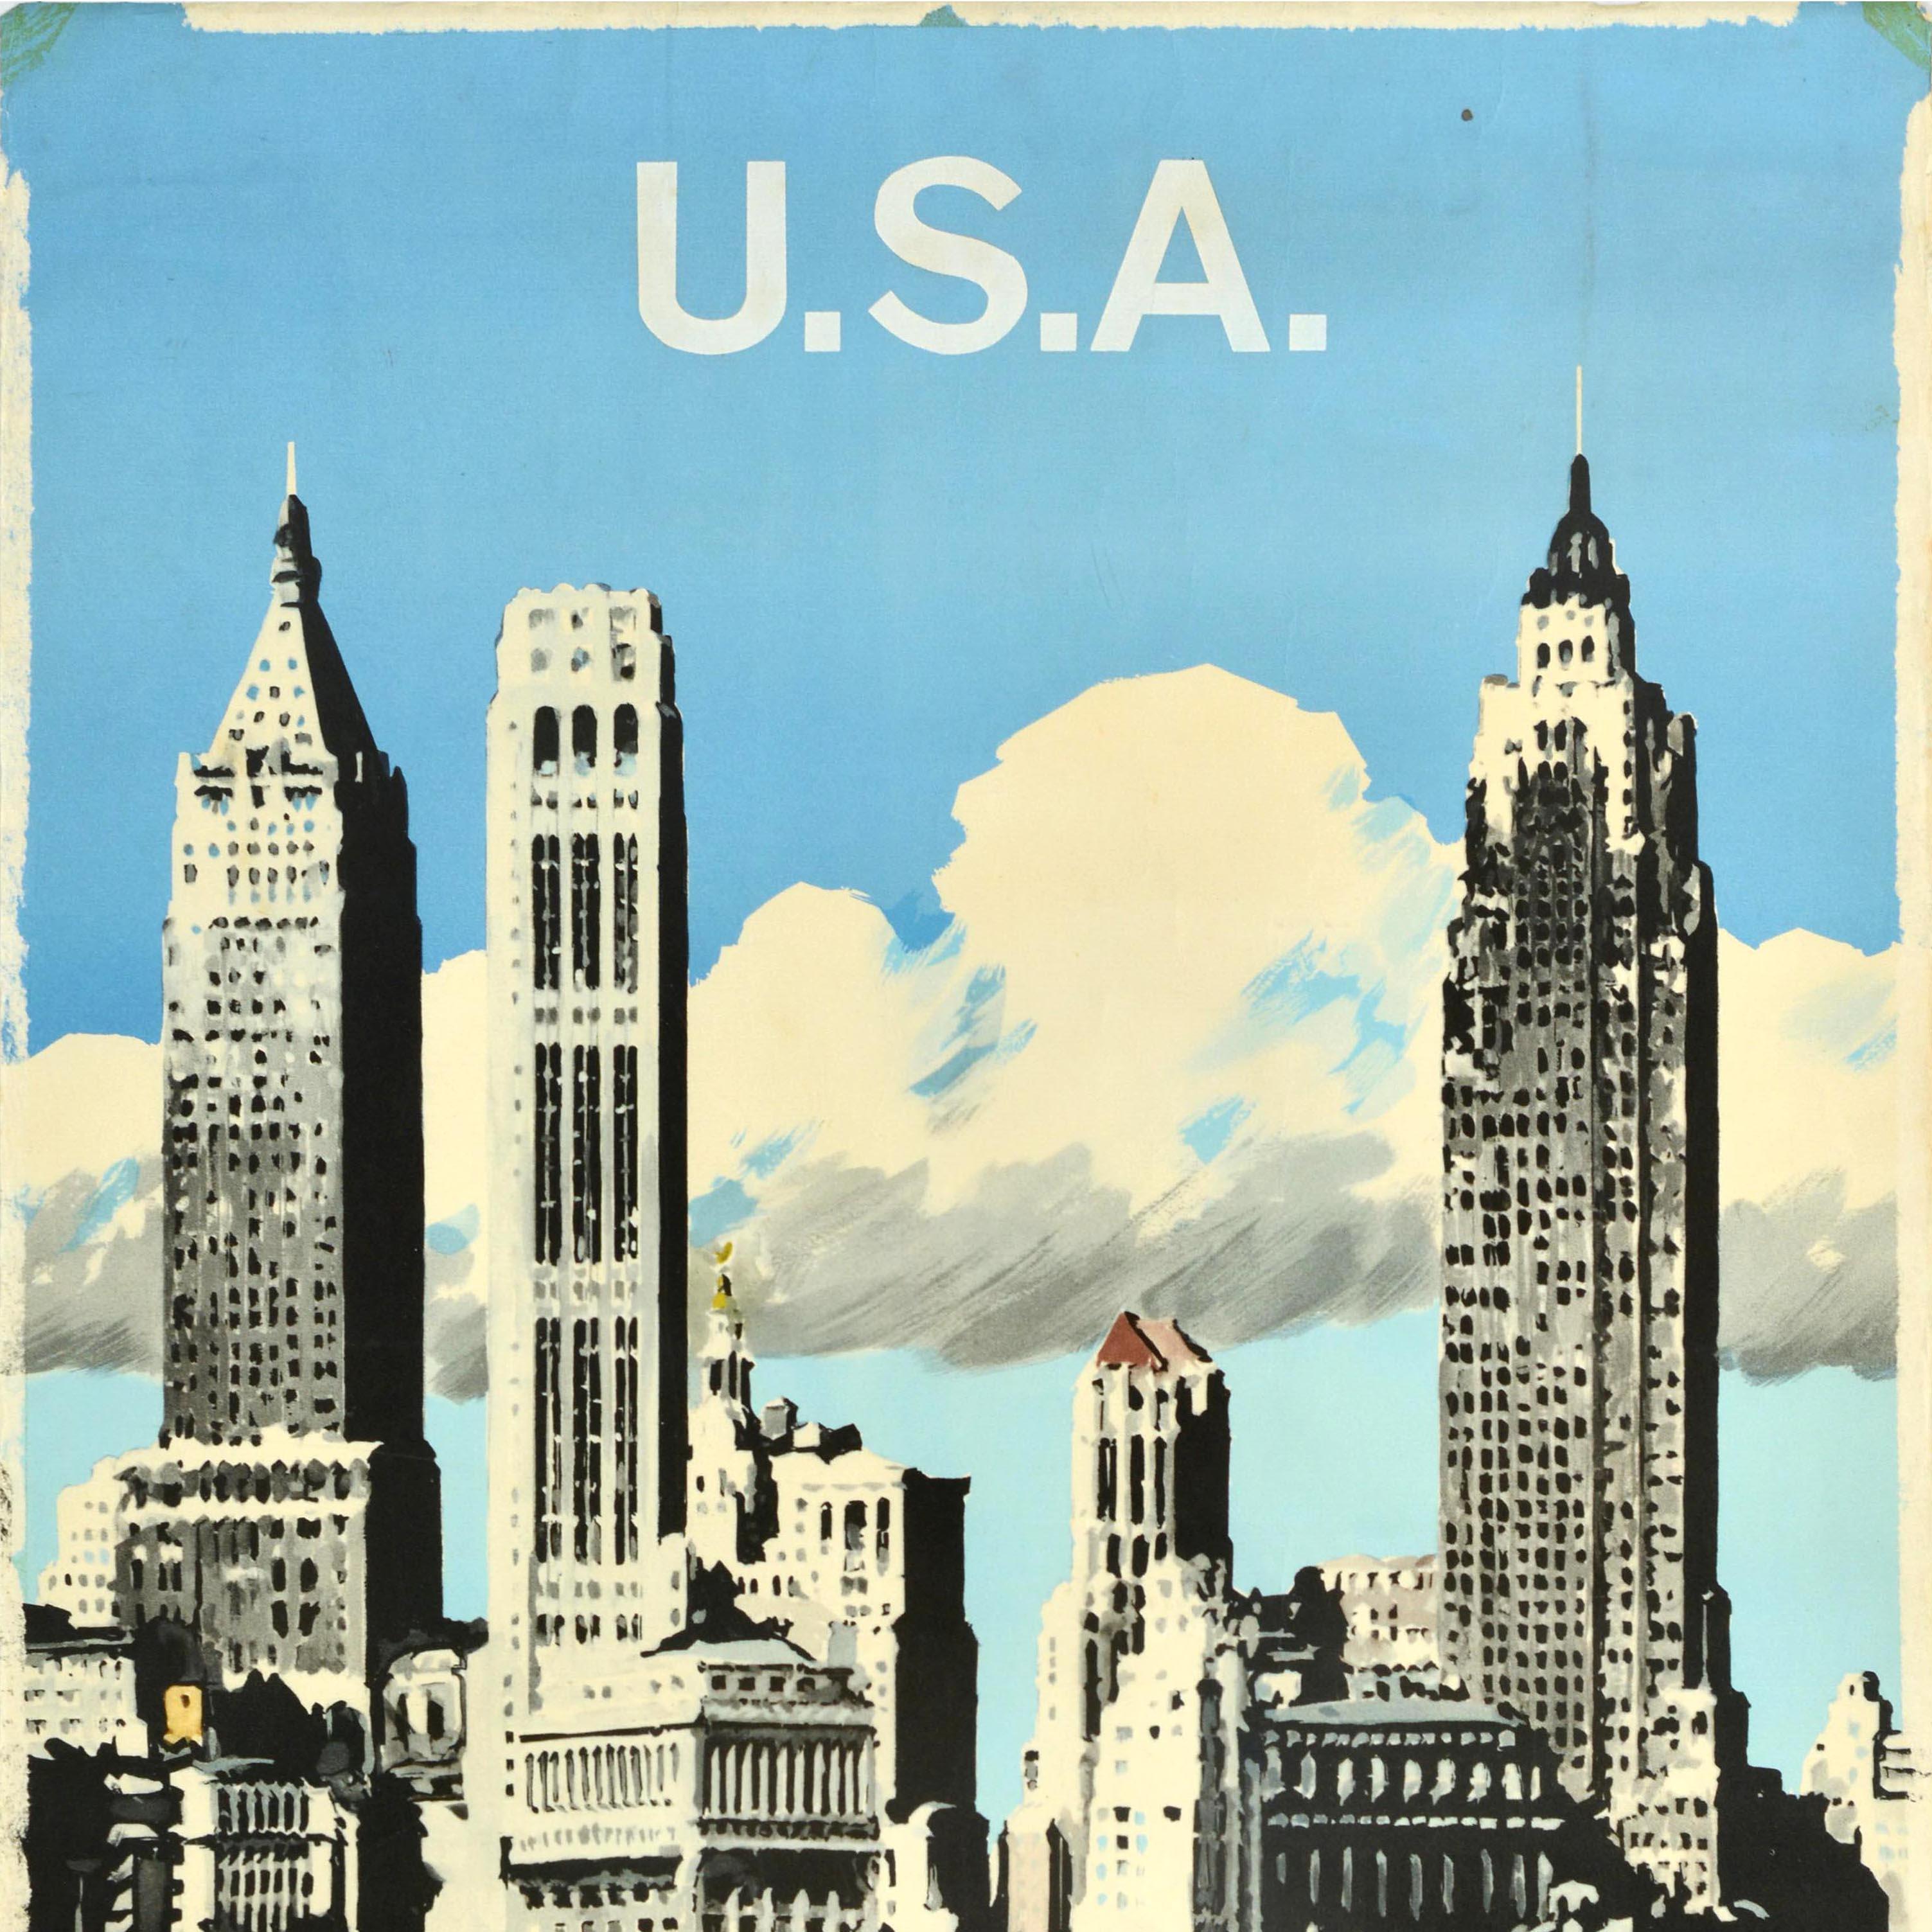 Original Vintage Travel Advertising Poster USA Aer Lingus Irish Airline Treidler - Print by Adolph Treidler